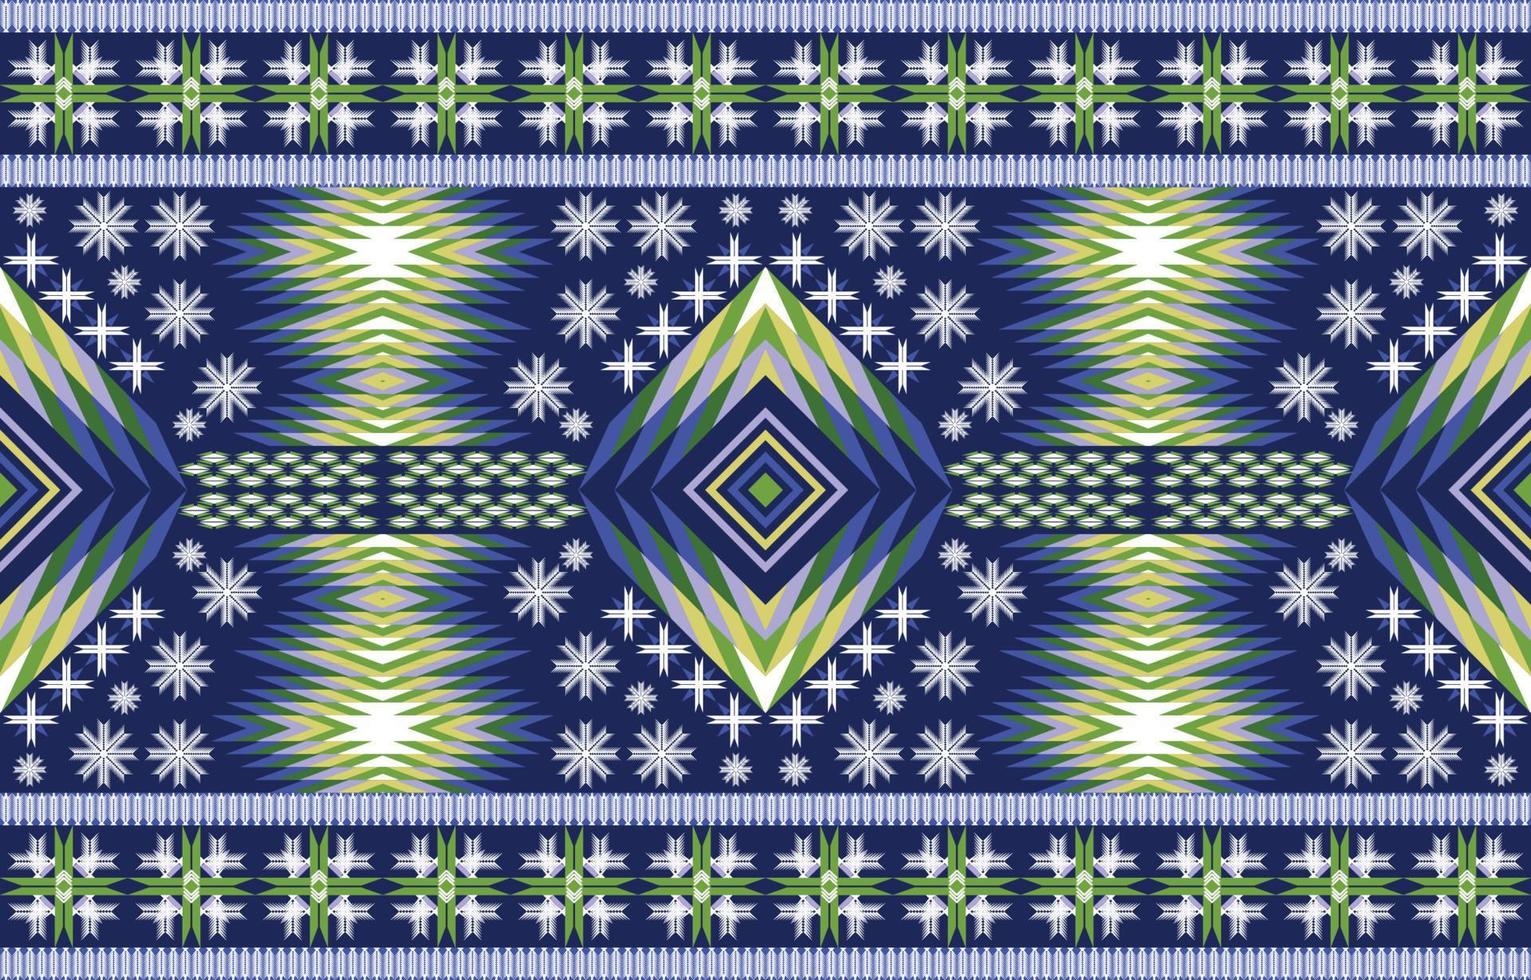 etnisk stam- vektor bakgrund med dekorativ folk element. aztec abstrakt geometrisk mönster konst skriva ut. design för matta, tapis, filt, tapet, trasa design, tyg, textil, matta, broderi.